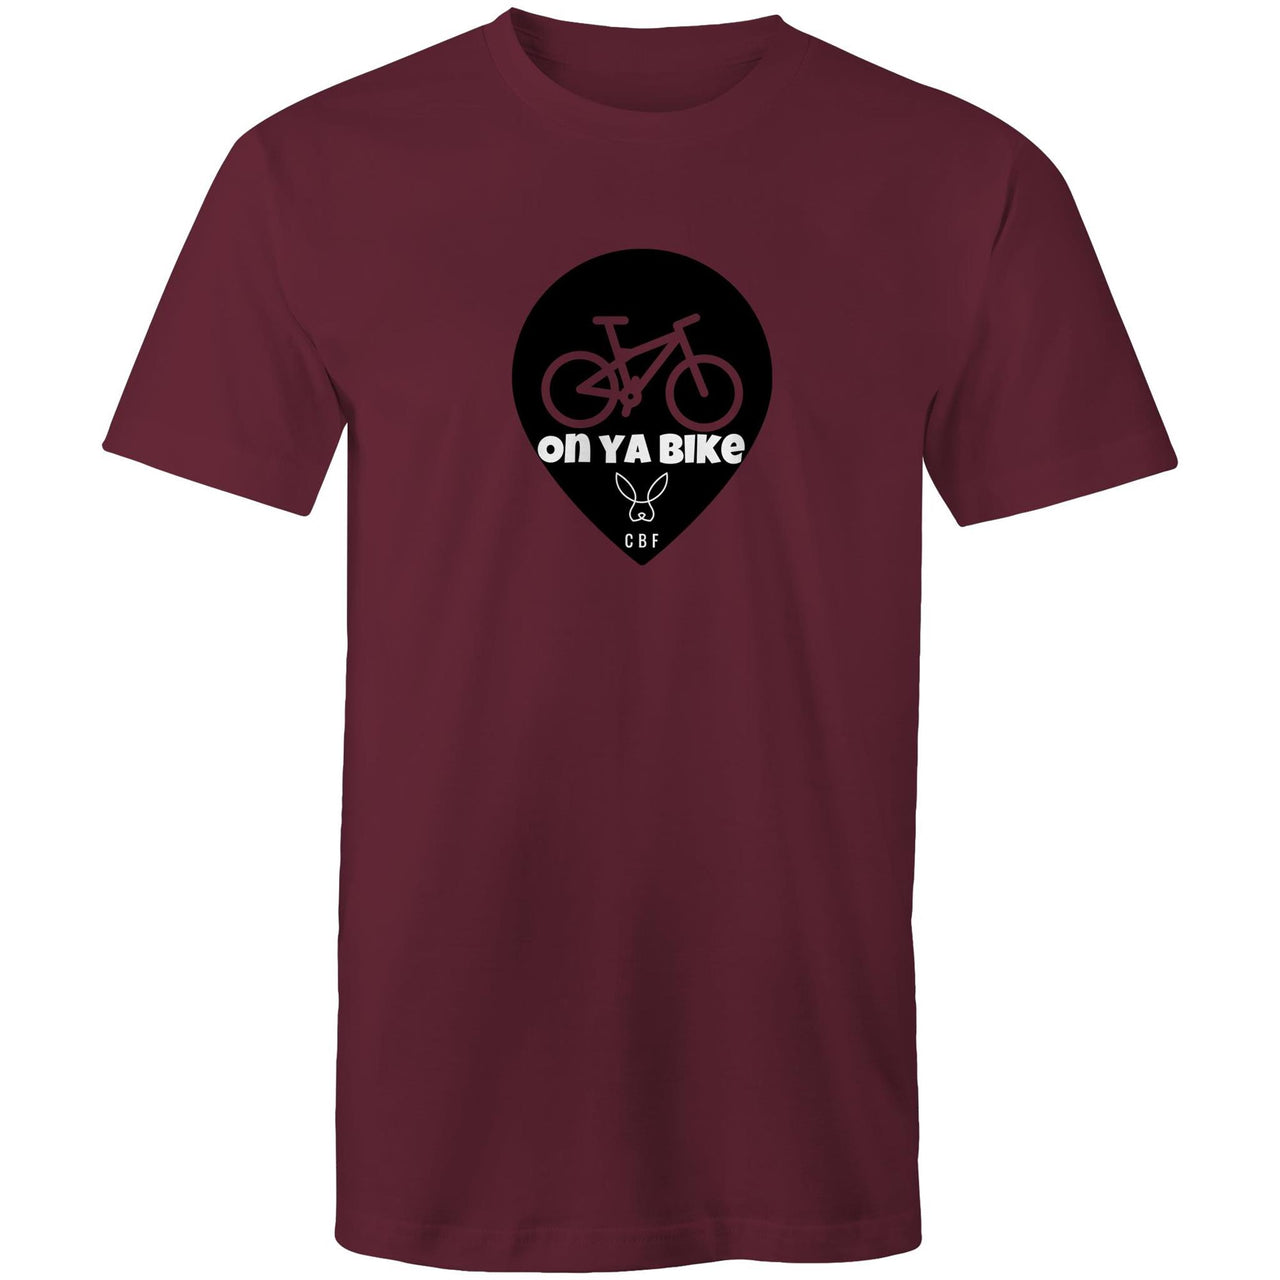 On Ya Bike Crew T-Shirt by CBFitwear